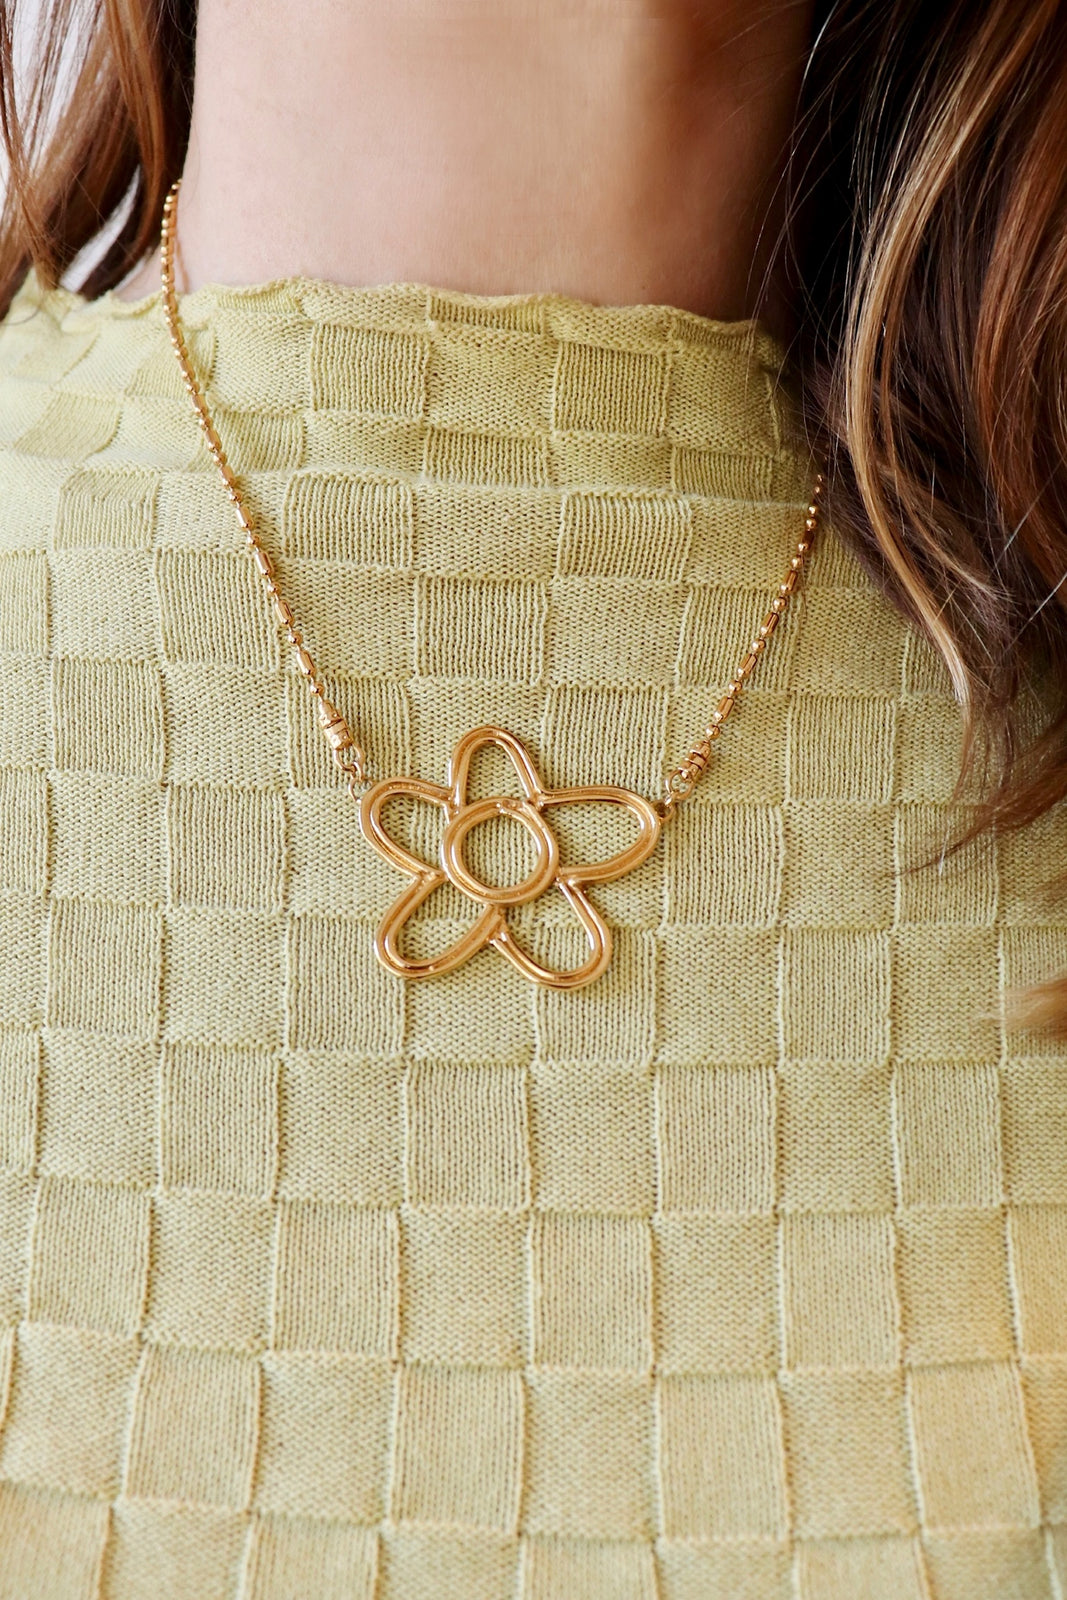 Gold Flower Power Pendant Necklace